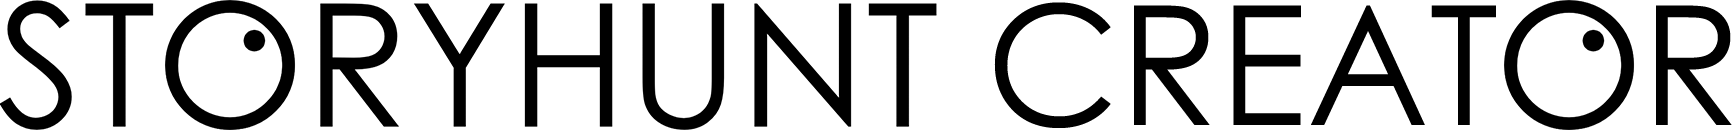 StoryHunt Creator logo.